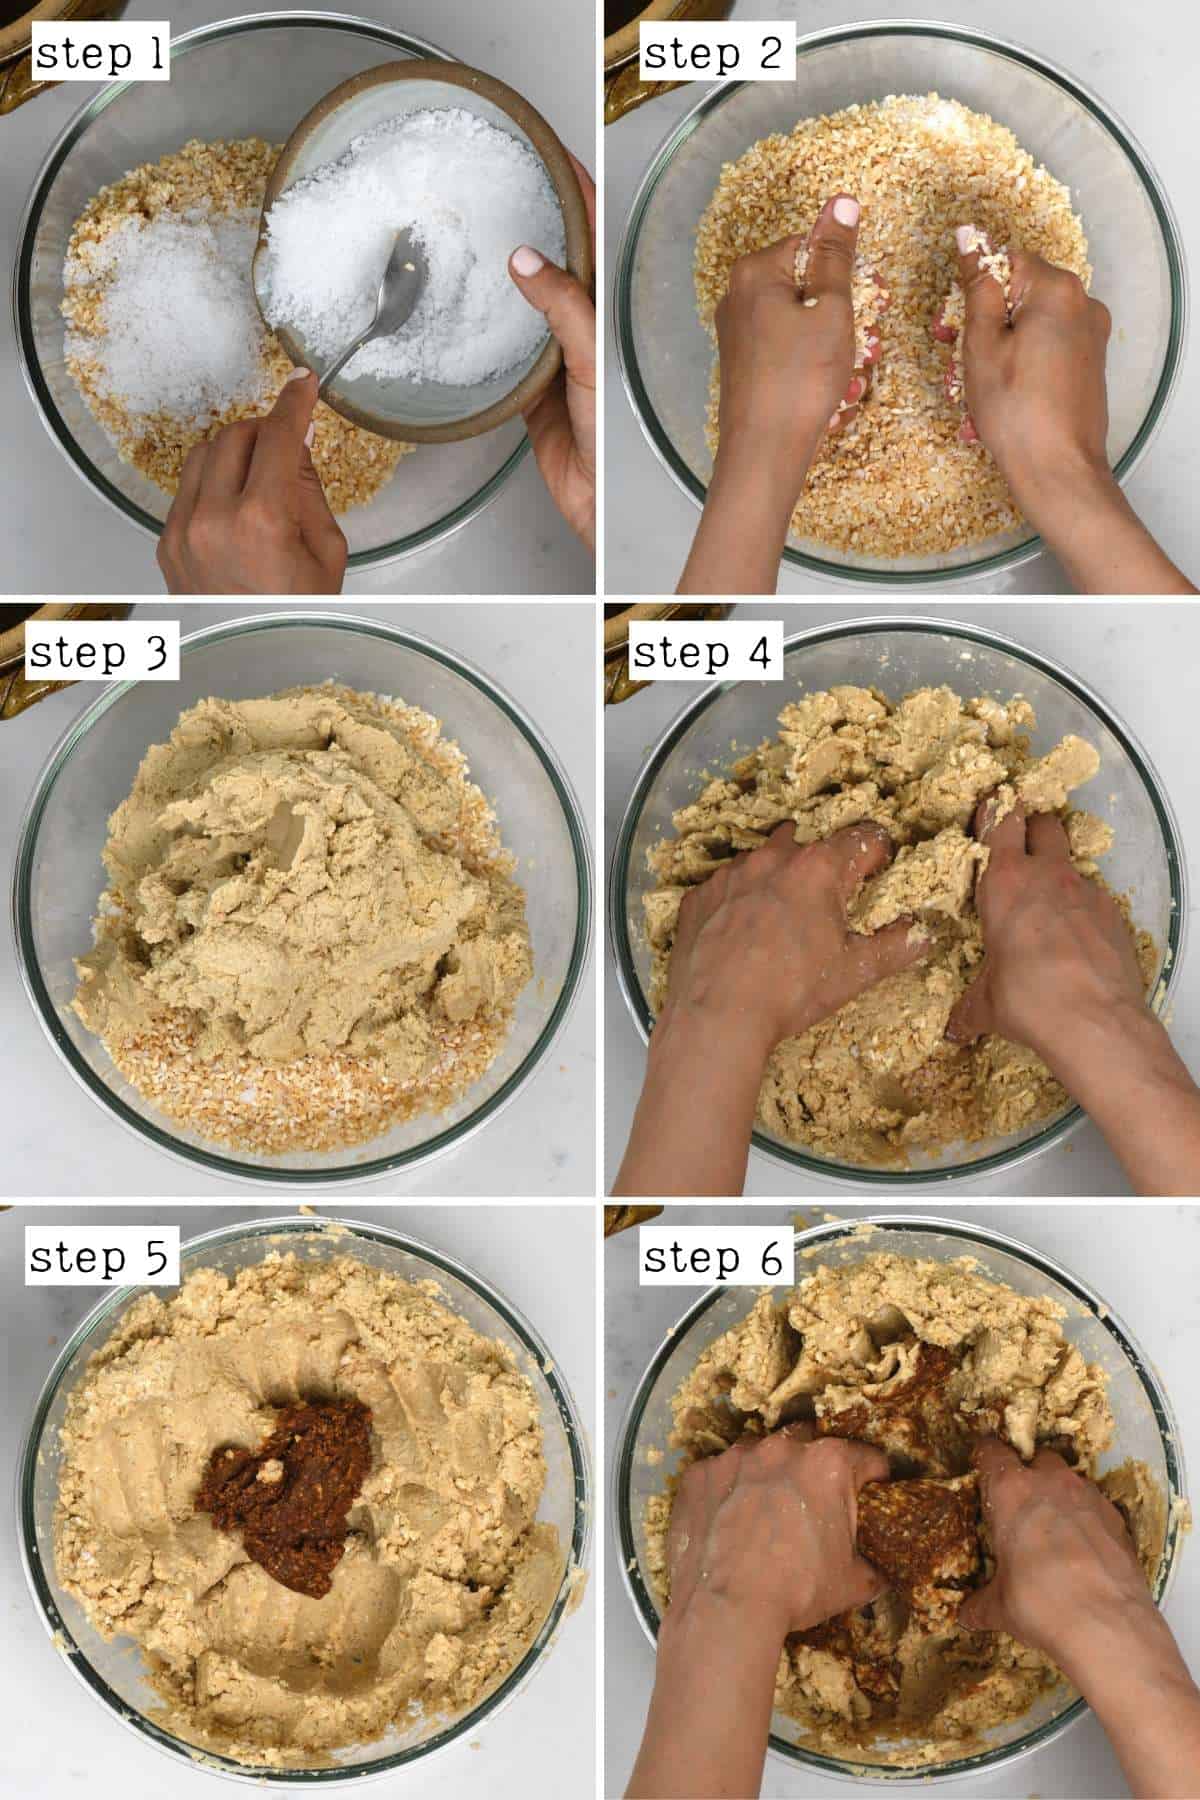 Steps for making miso paste